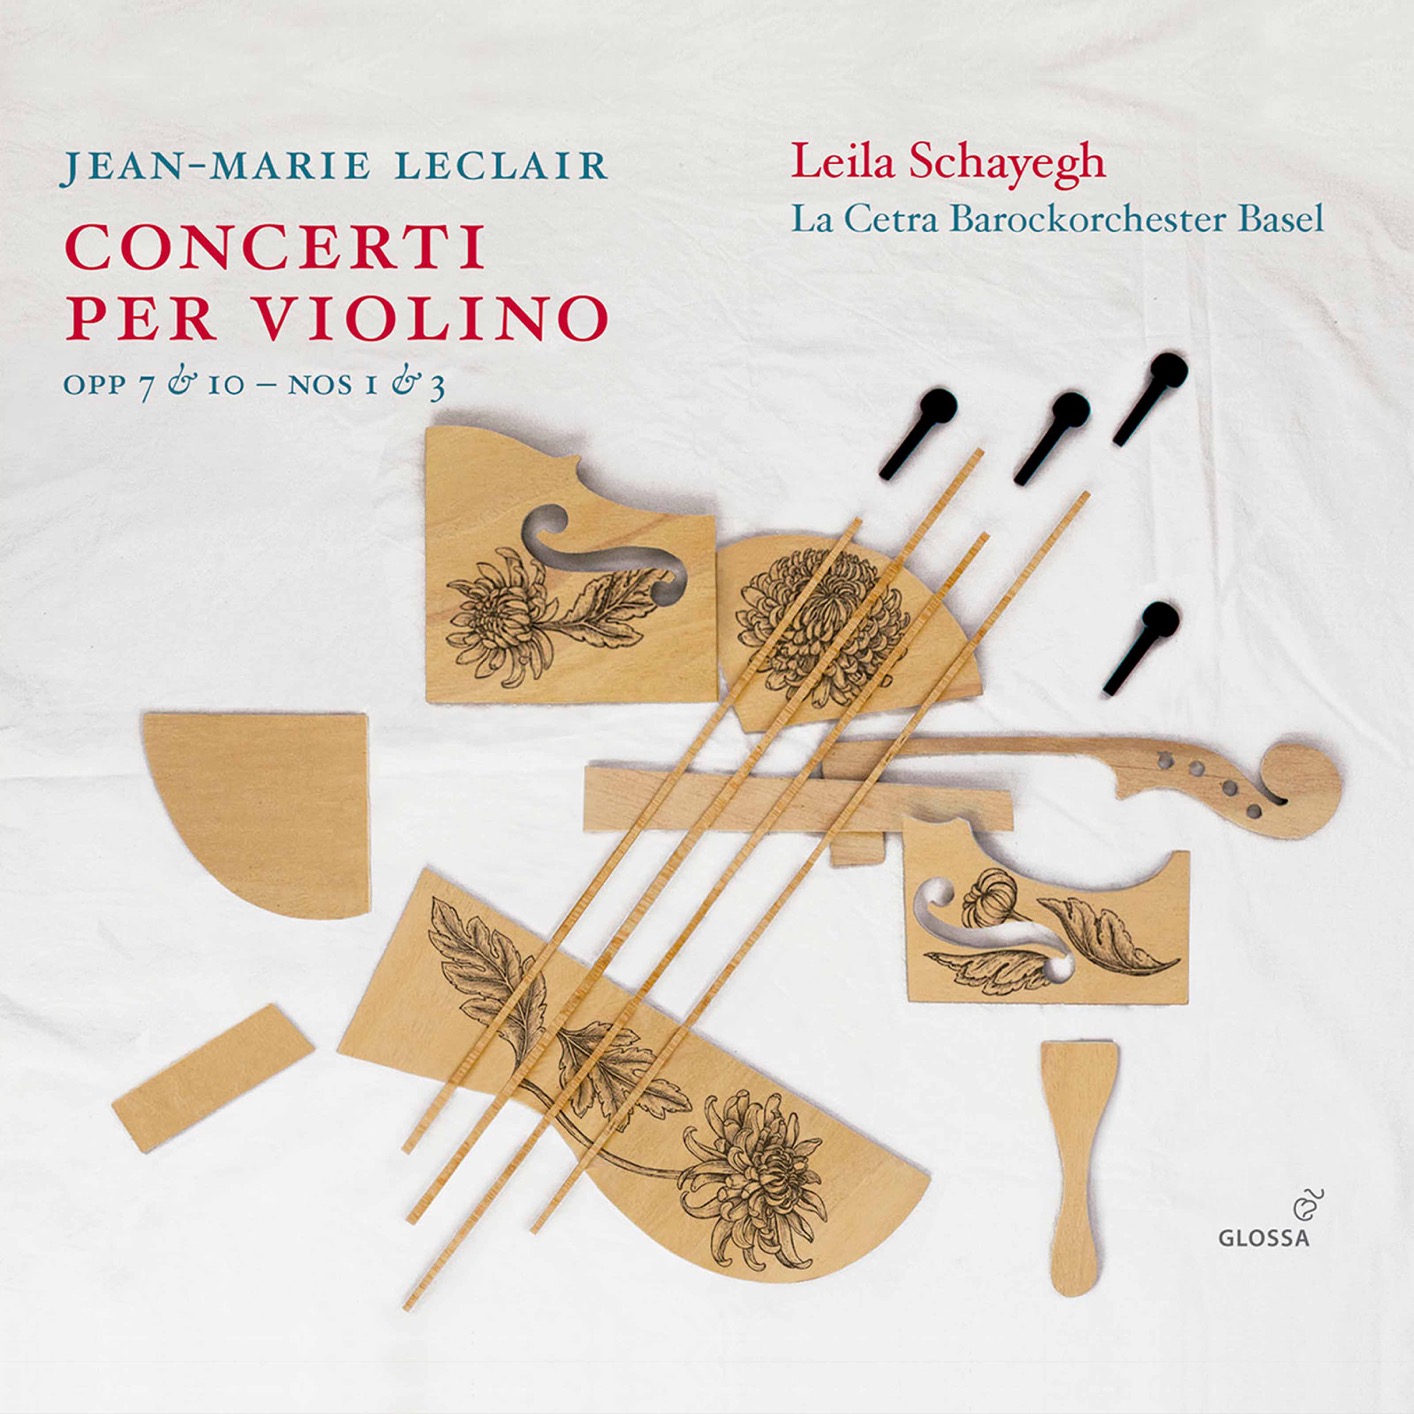 La Cetra Barockorchester Basel & Leila Schayegh - Leclair: Violin Concertos, Vol. 2 (2020) [FLAC 24bit/96kHz]